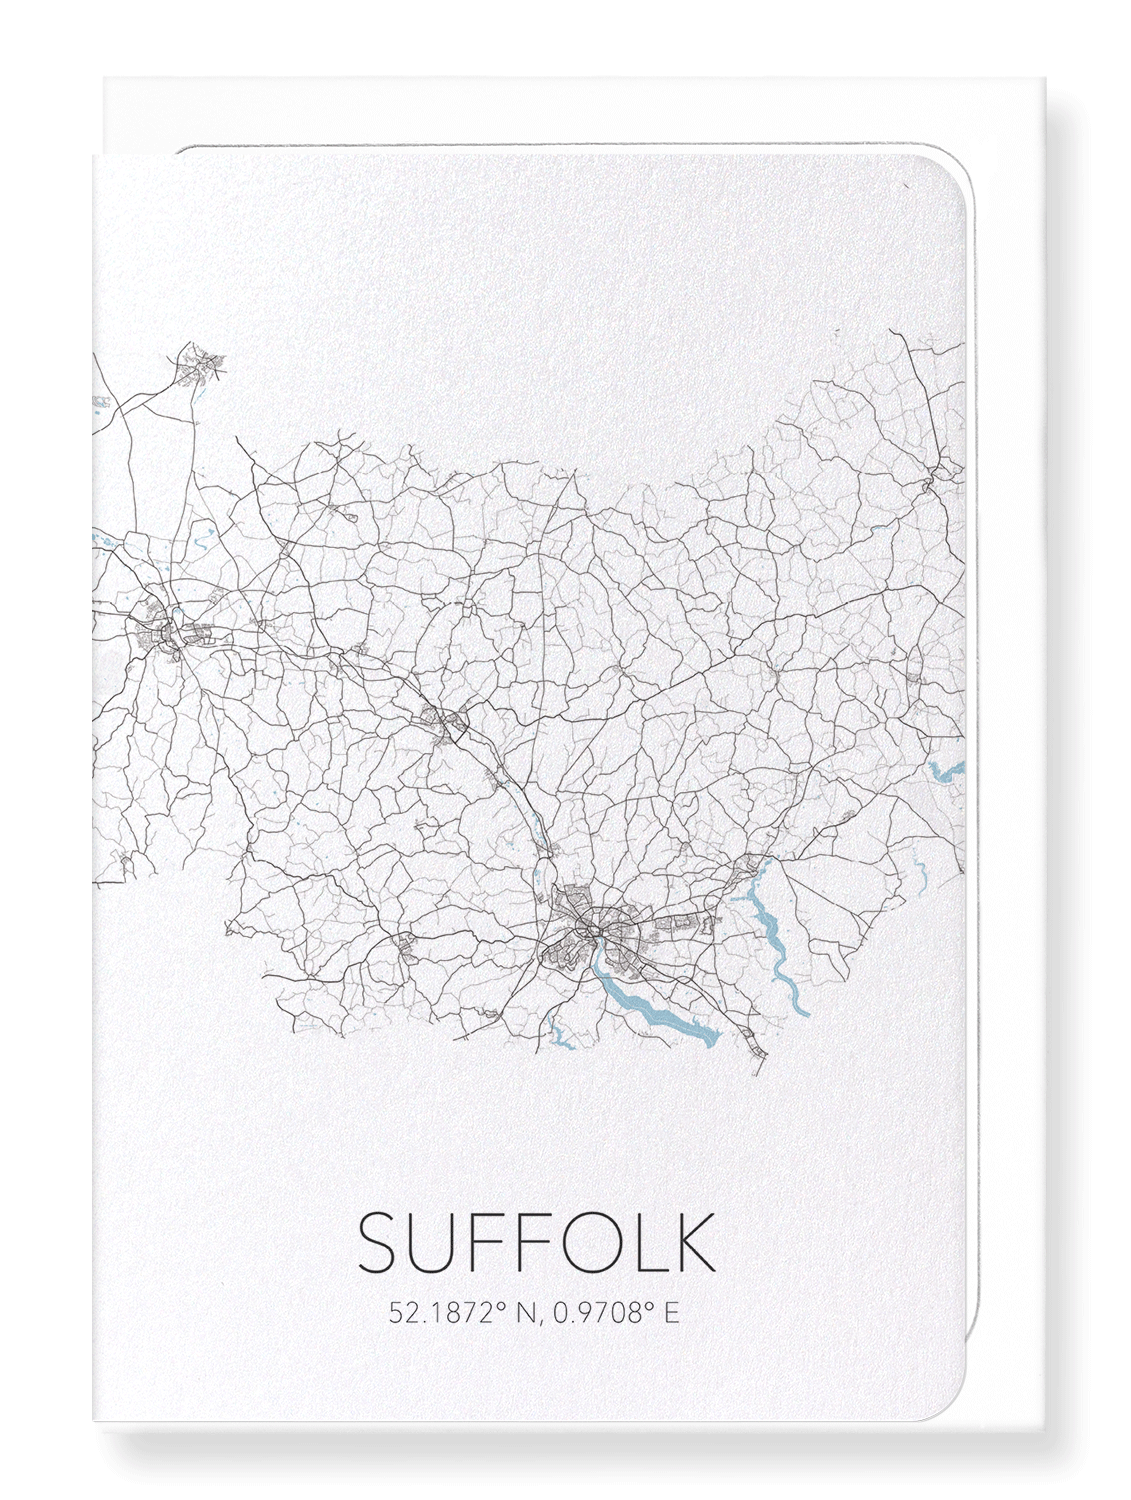 SUFFOLK CUTOUT: Map Cutout Greeting Card